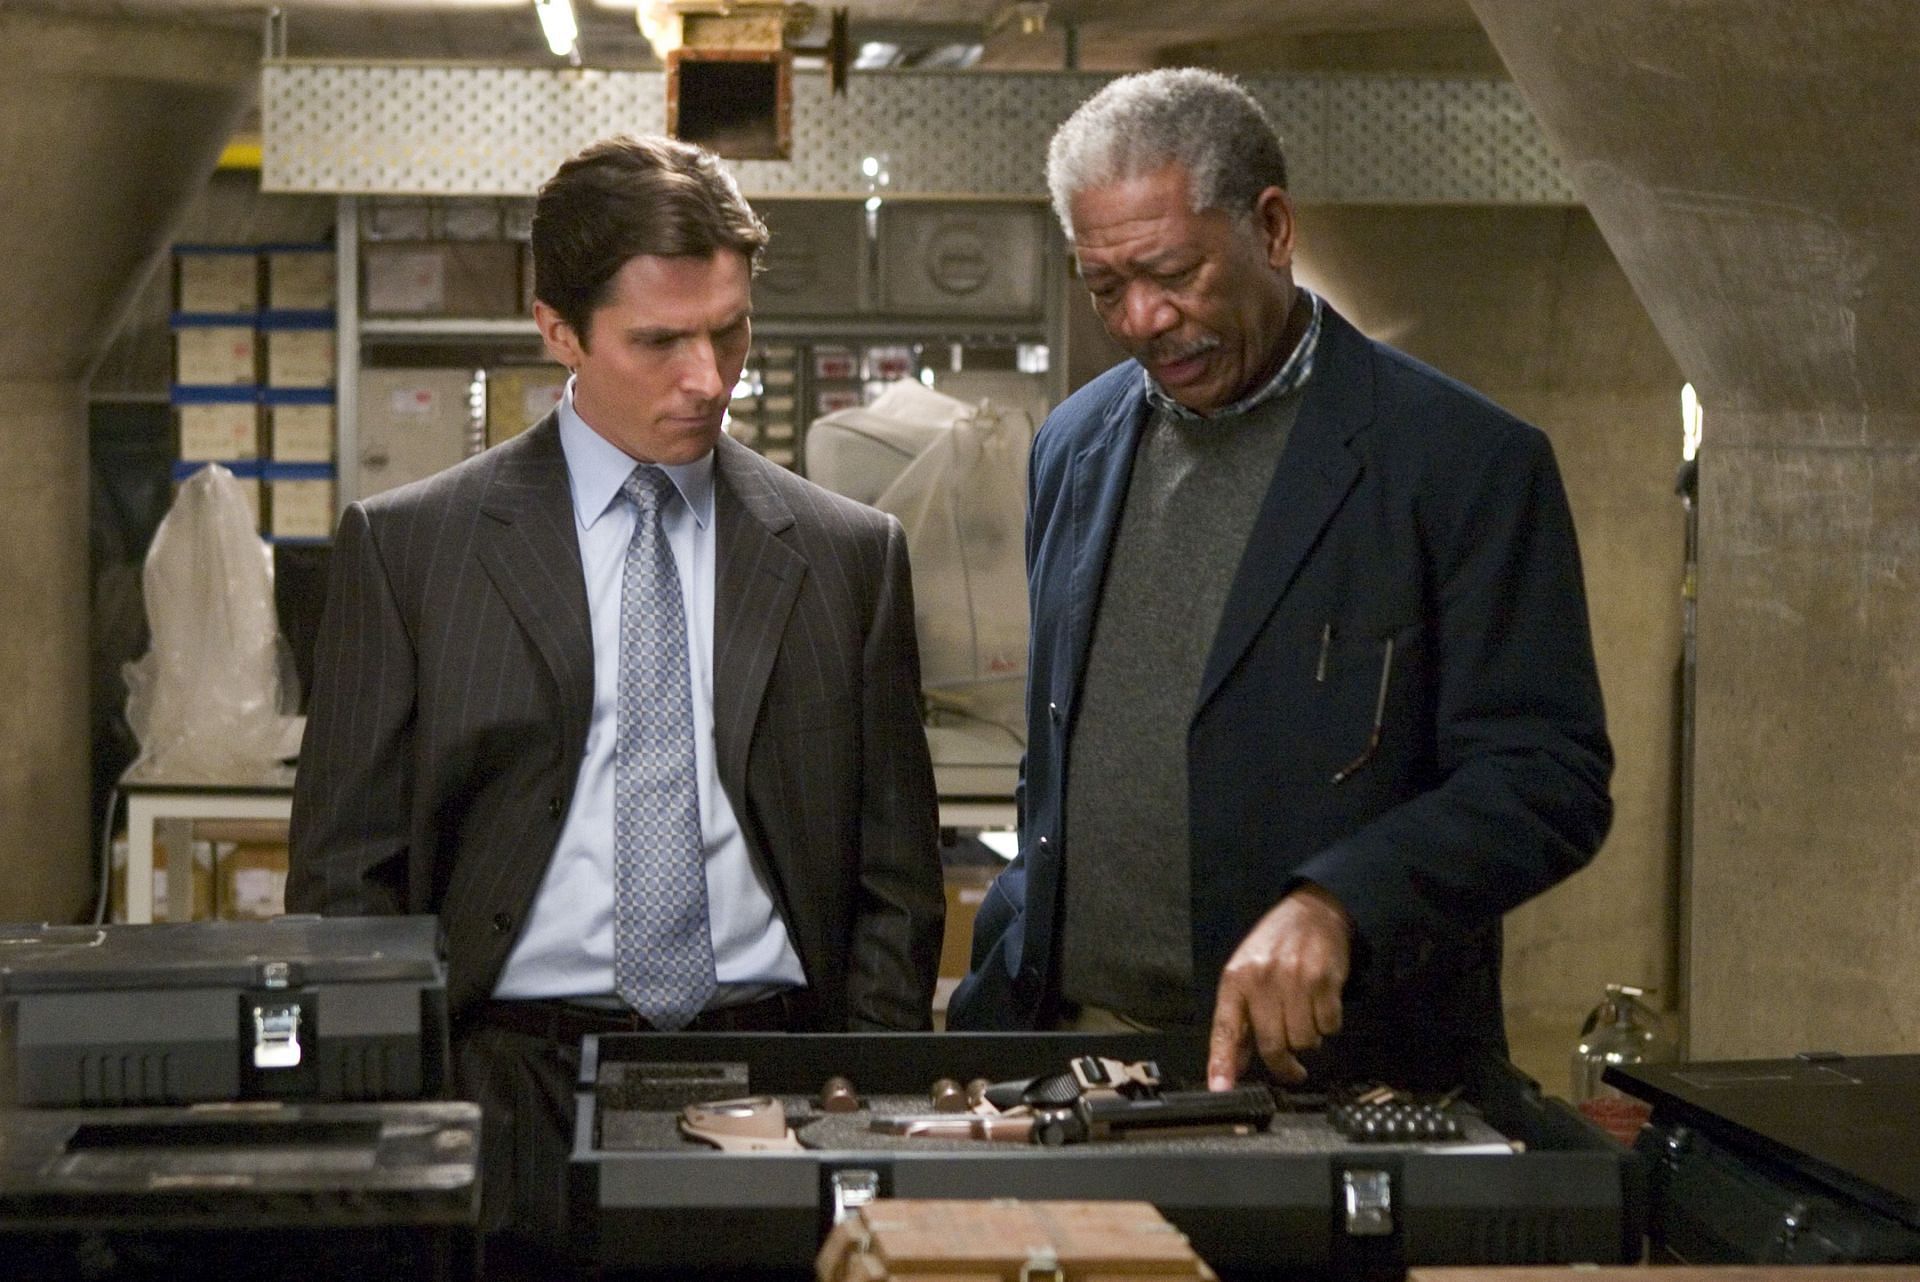 Morgan Freeman as Lucius Fox in Batman Begins (Image via Warner Bros. Pictures)